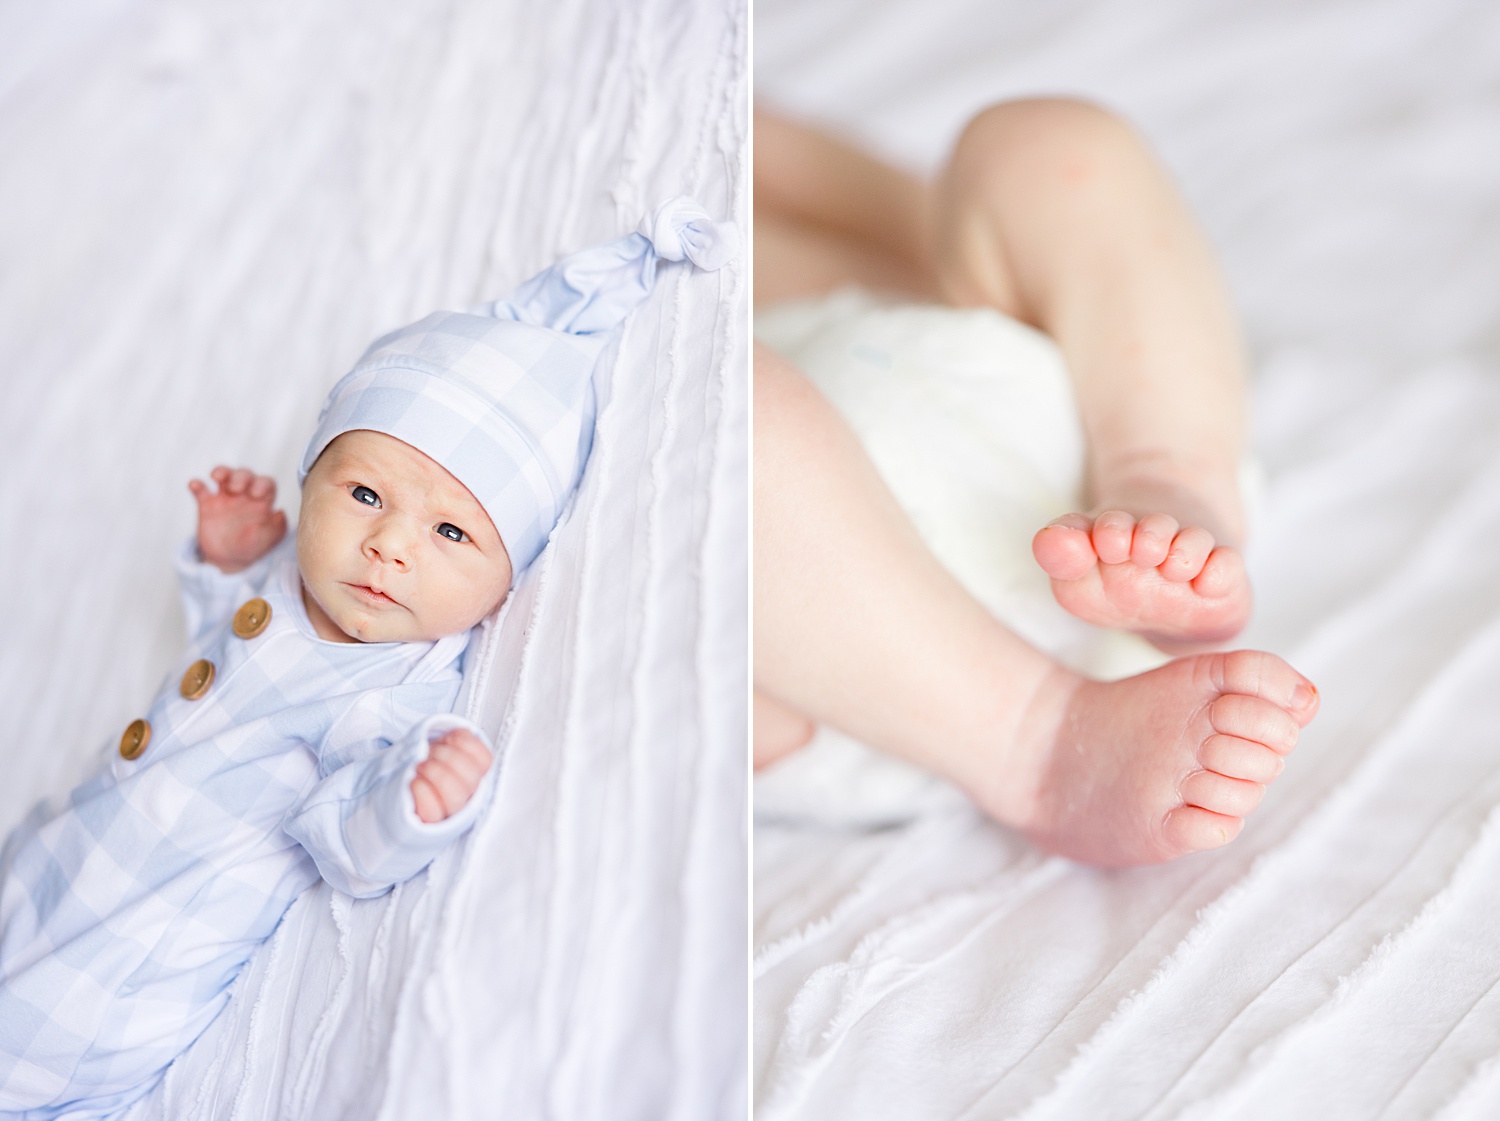 tiny feet of newborn baby boy